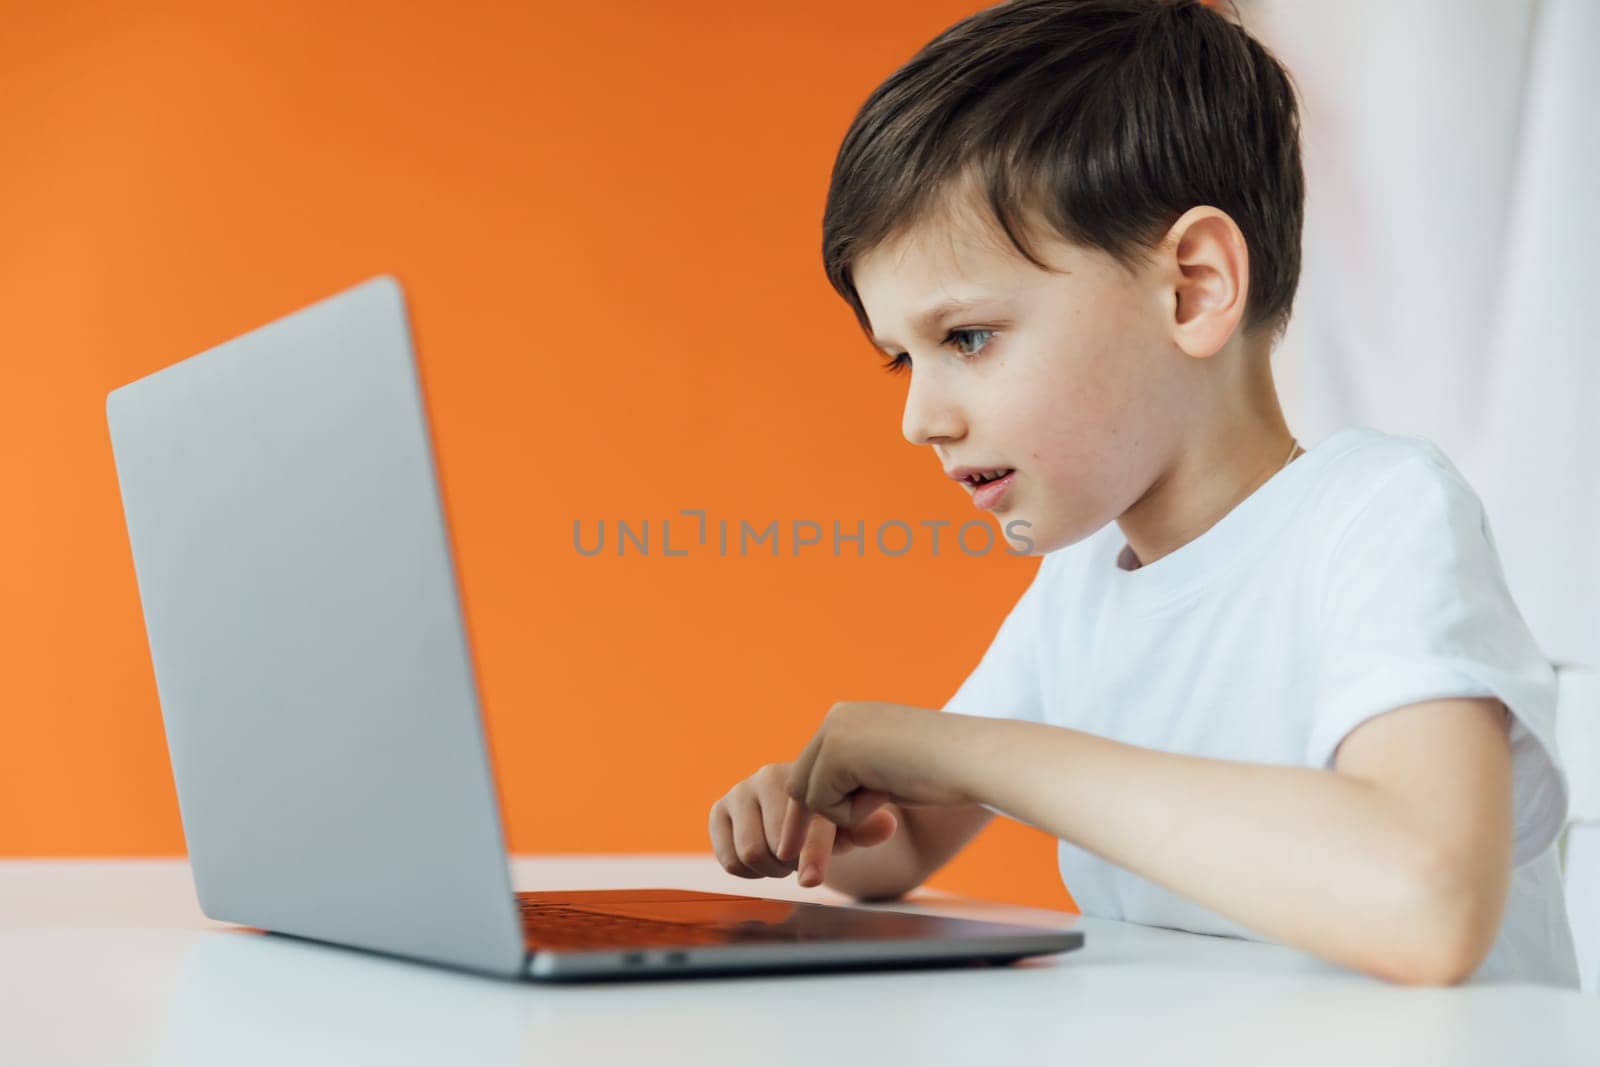 Little boy using laptop on background by Simakov